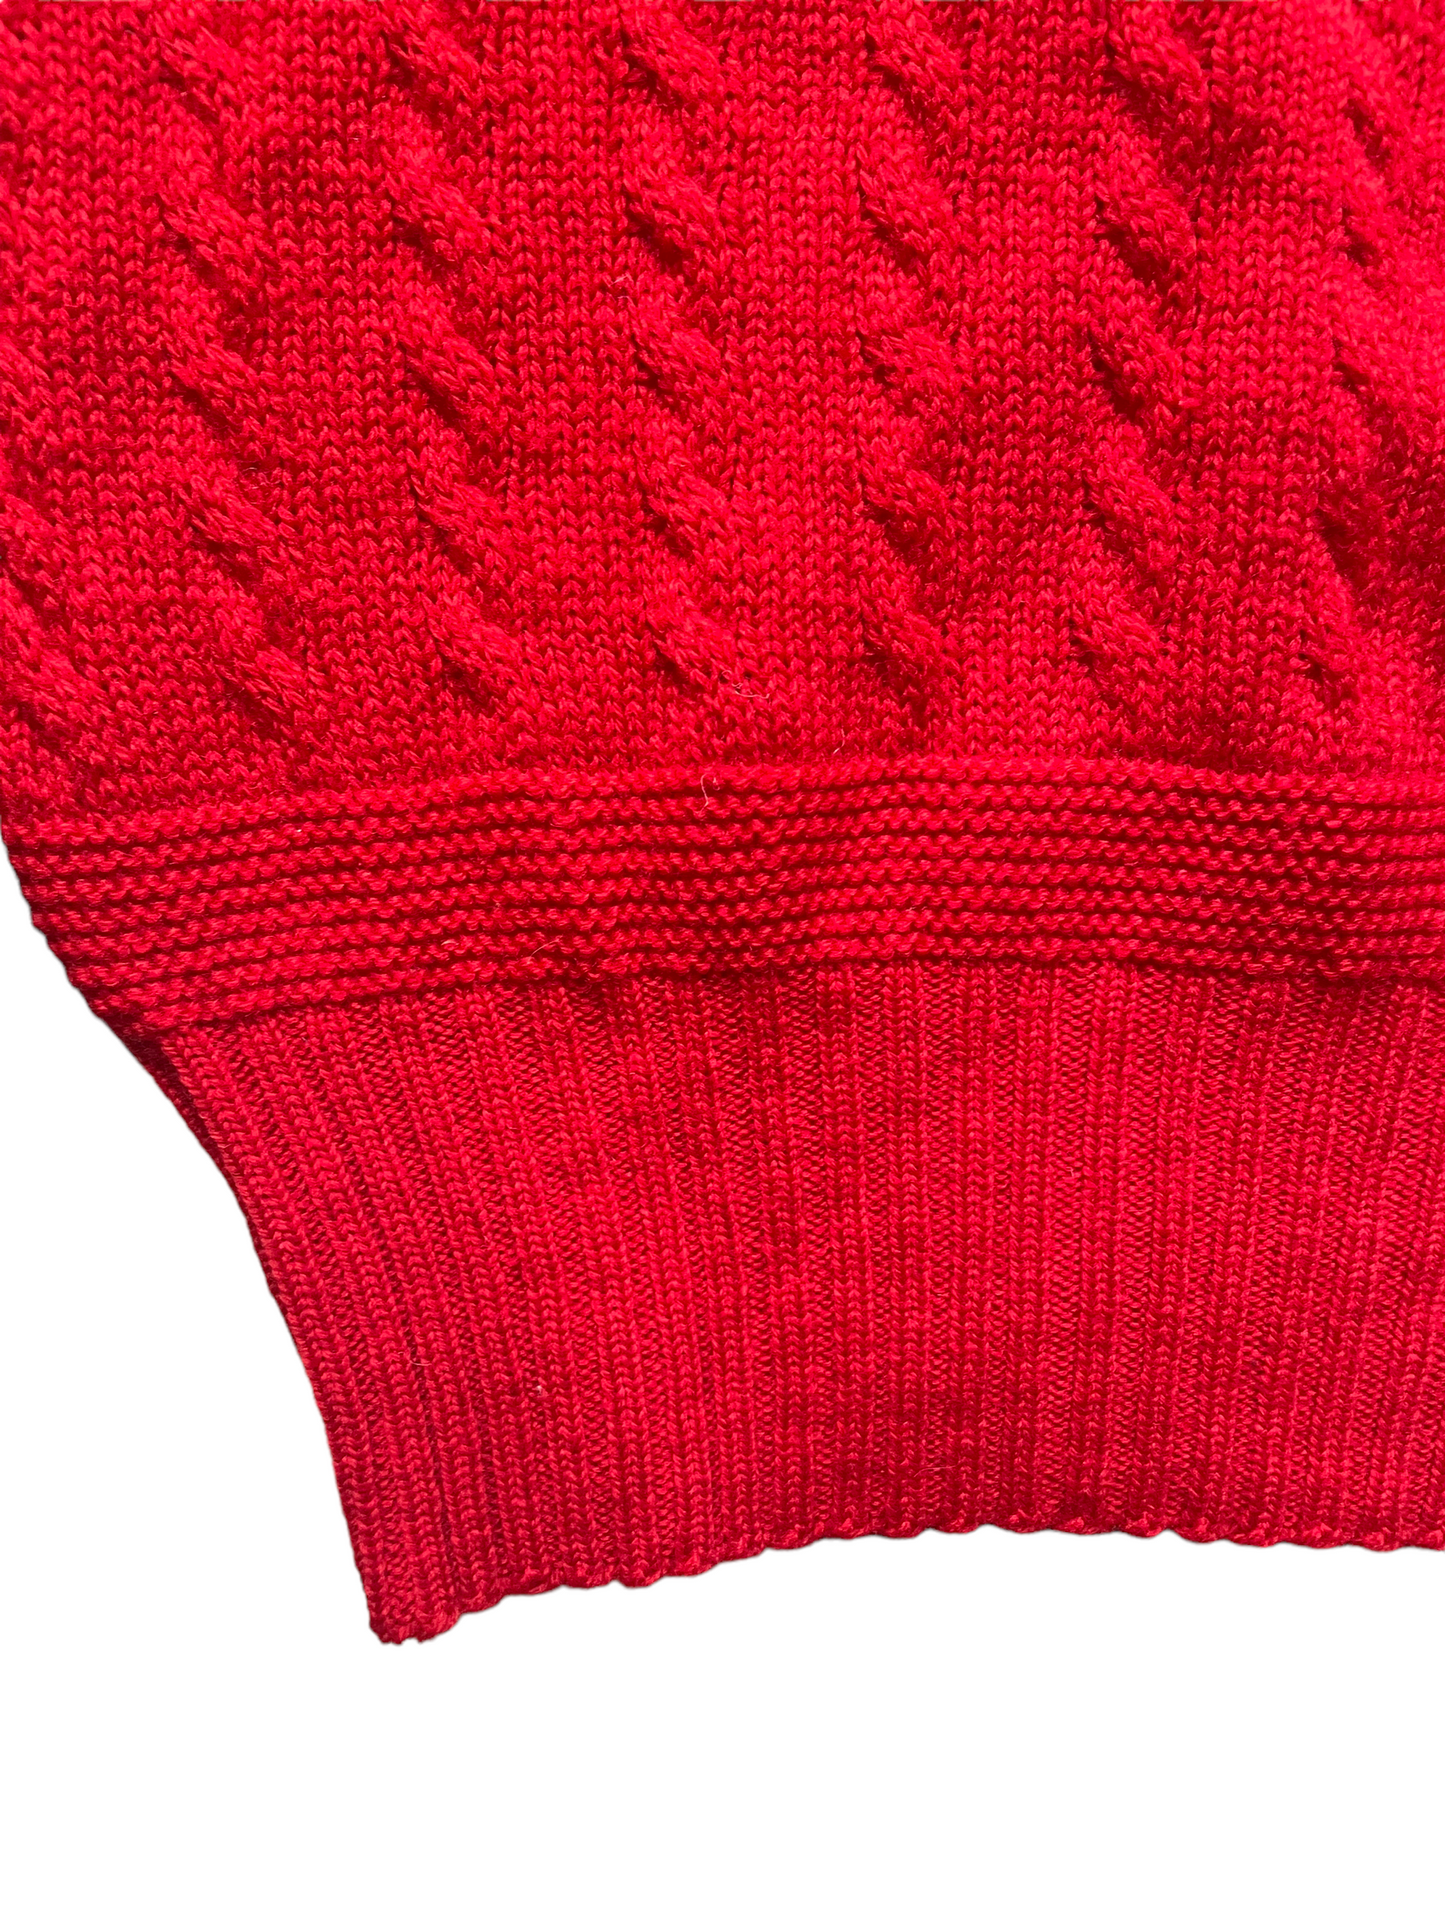 Vintage 1950s Jantzen Cable Knit Wool Sweater | Barn Owl Seattle | Seattle Vintage Sweaters Close up of pattern.